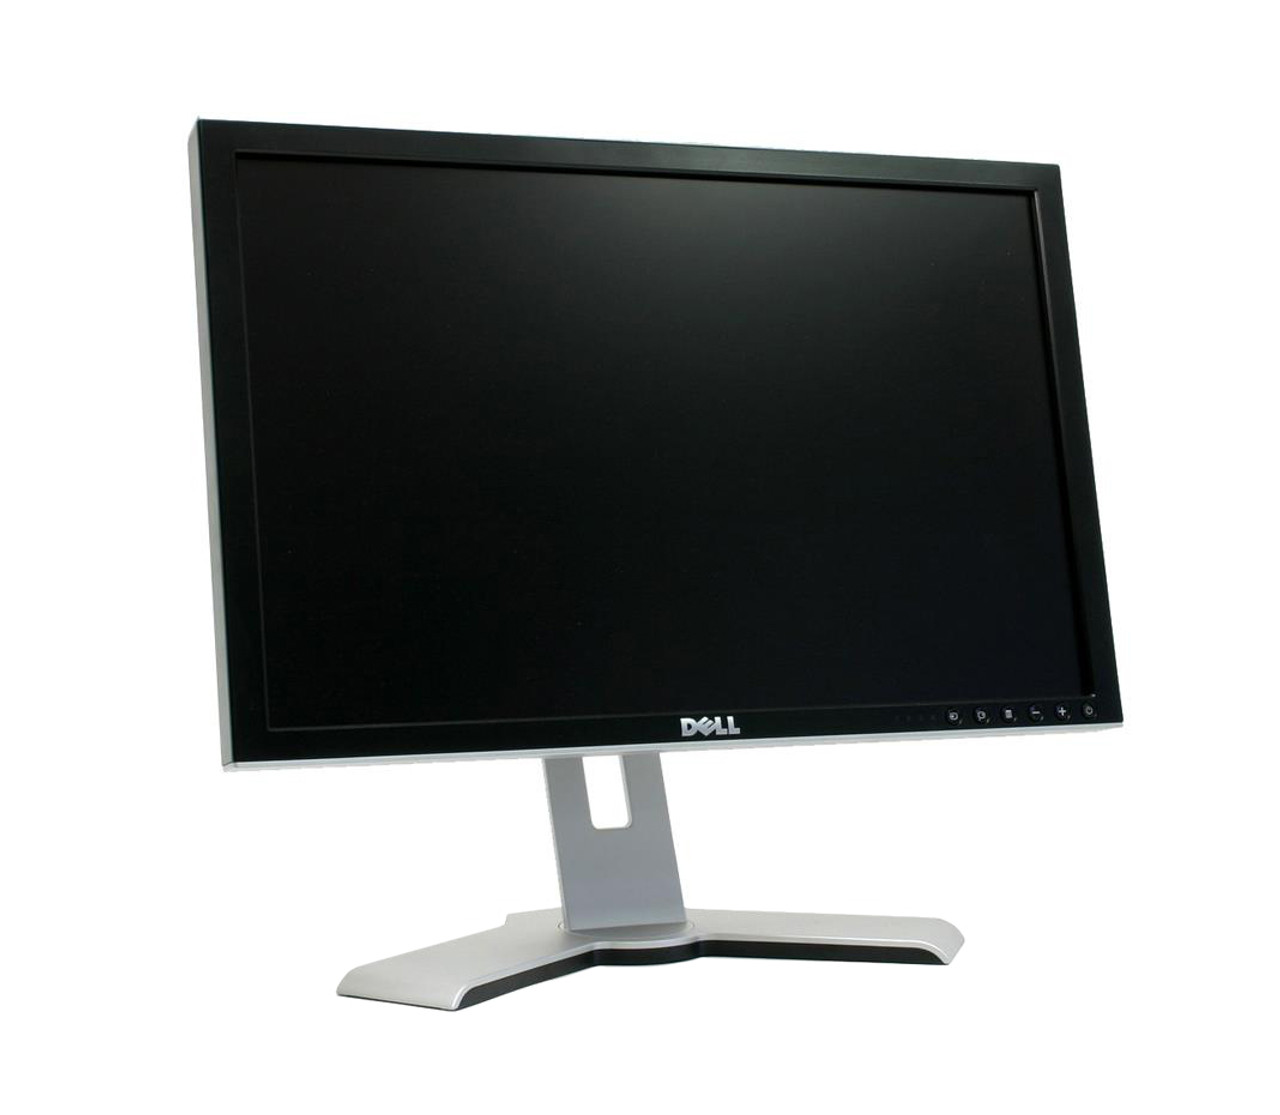 2007WFPB - Dell 20.1-inch UltraSharp 1600 x 1200 at 60Hz Widescreen Flat Panel LCD Monitor (Refurbished)